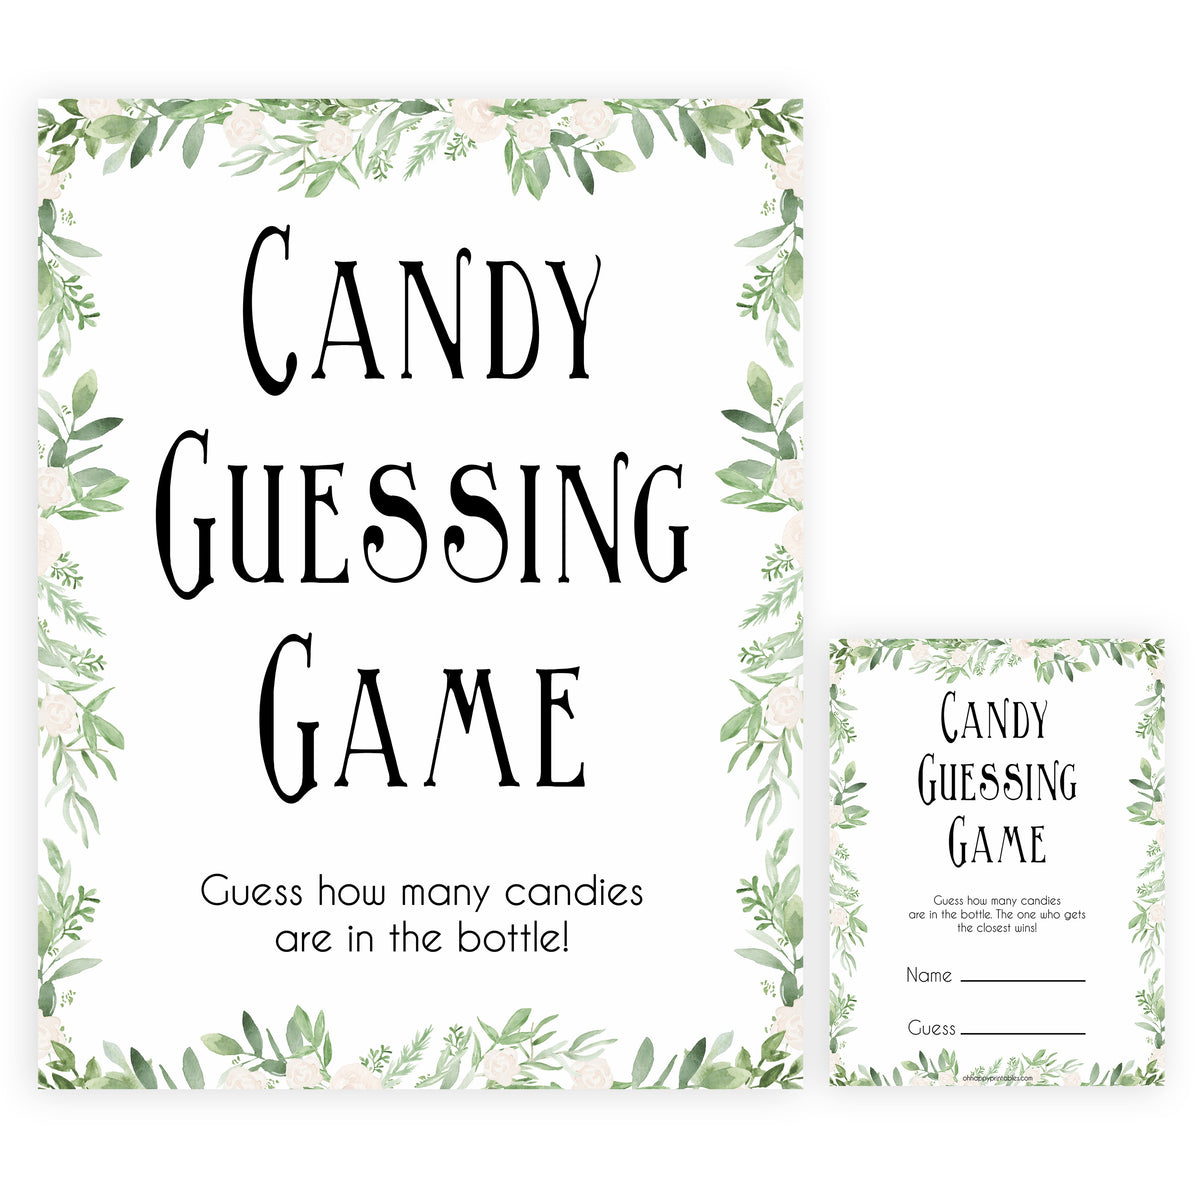 Candy Guessing Game Free Printable prntbl concejomunicipaldechinu gov co